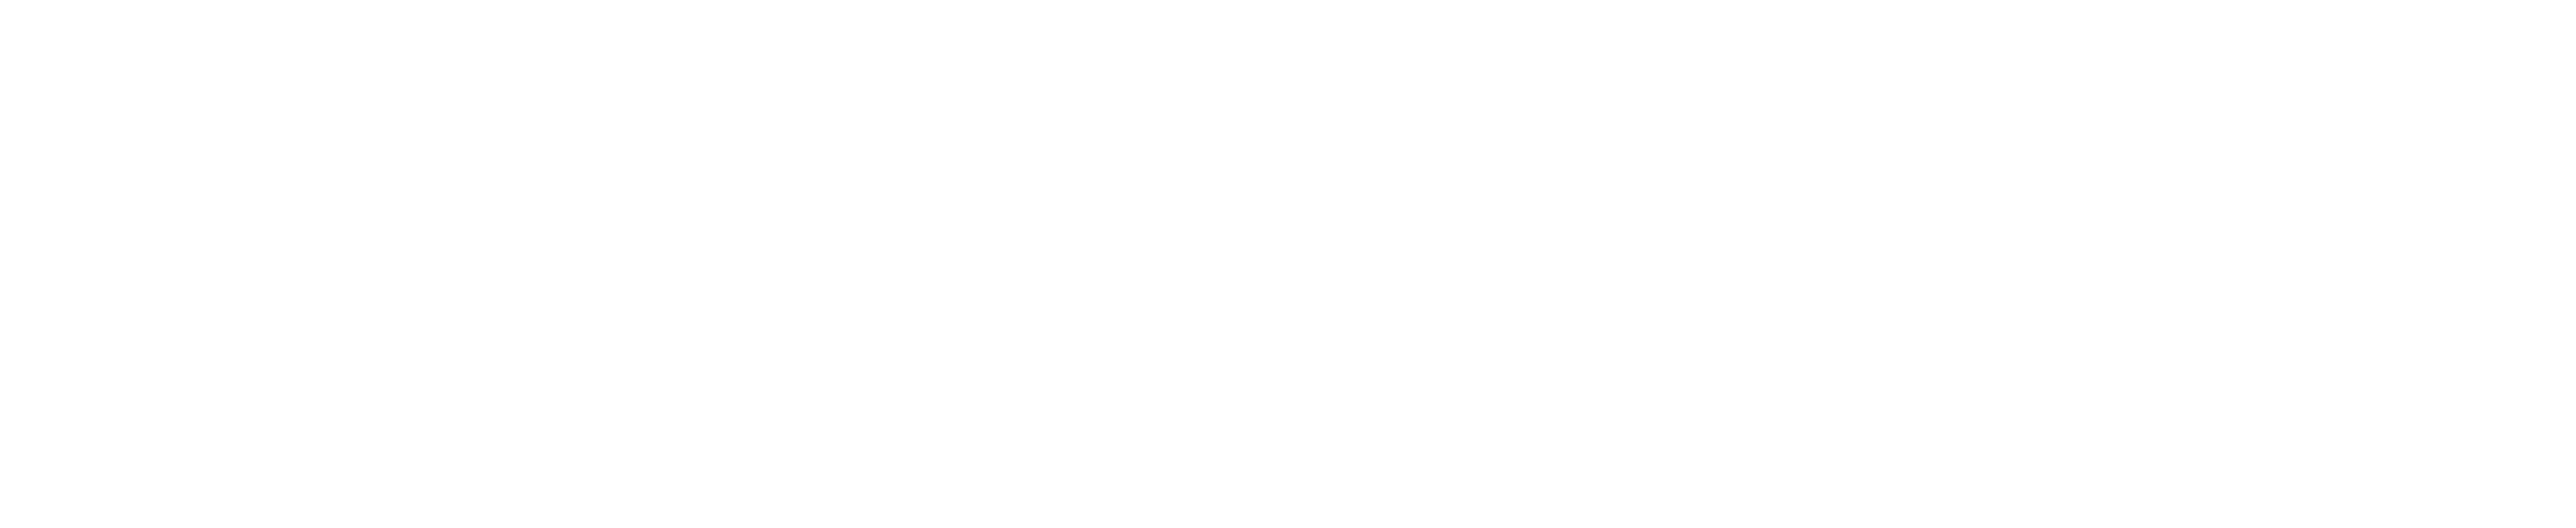 Logo icon for Knoll at Fair Oaks in Fairfax, Virginia